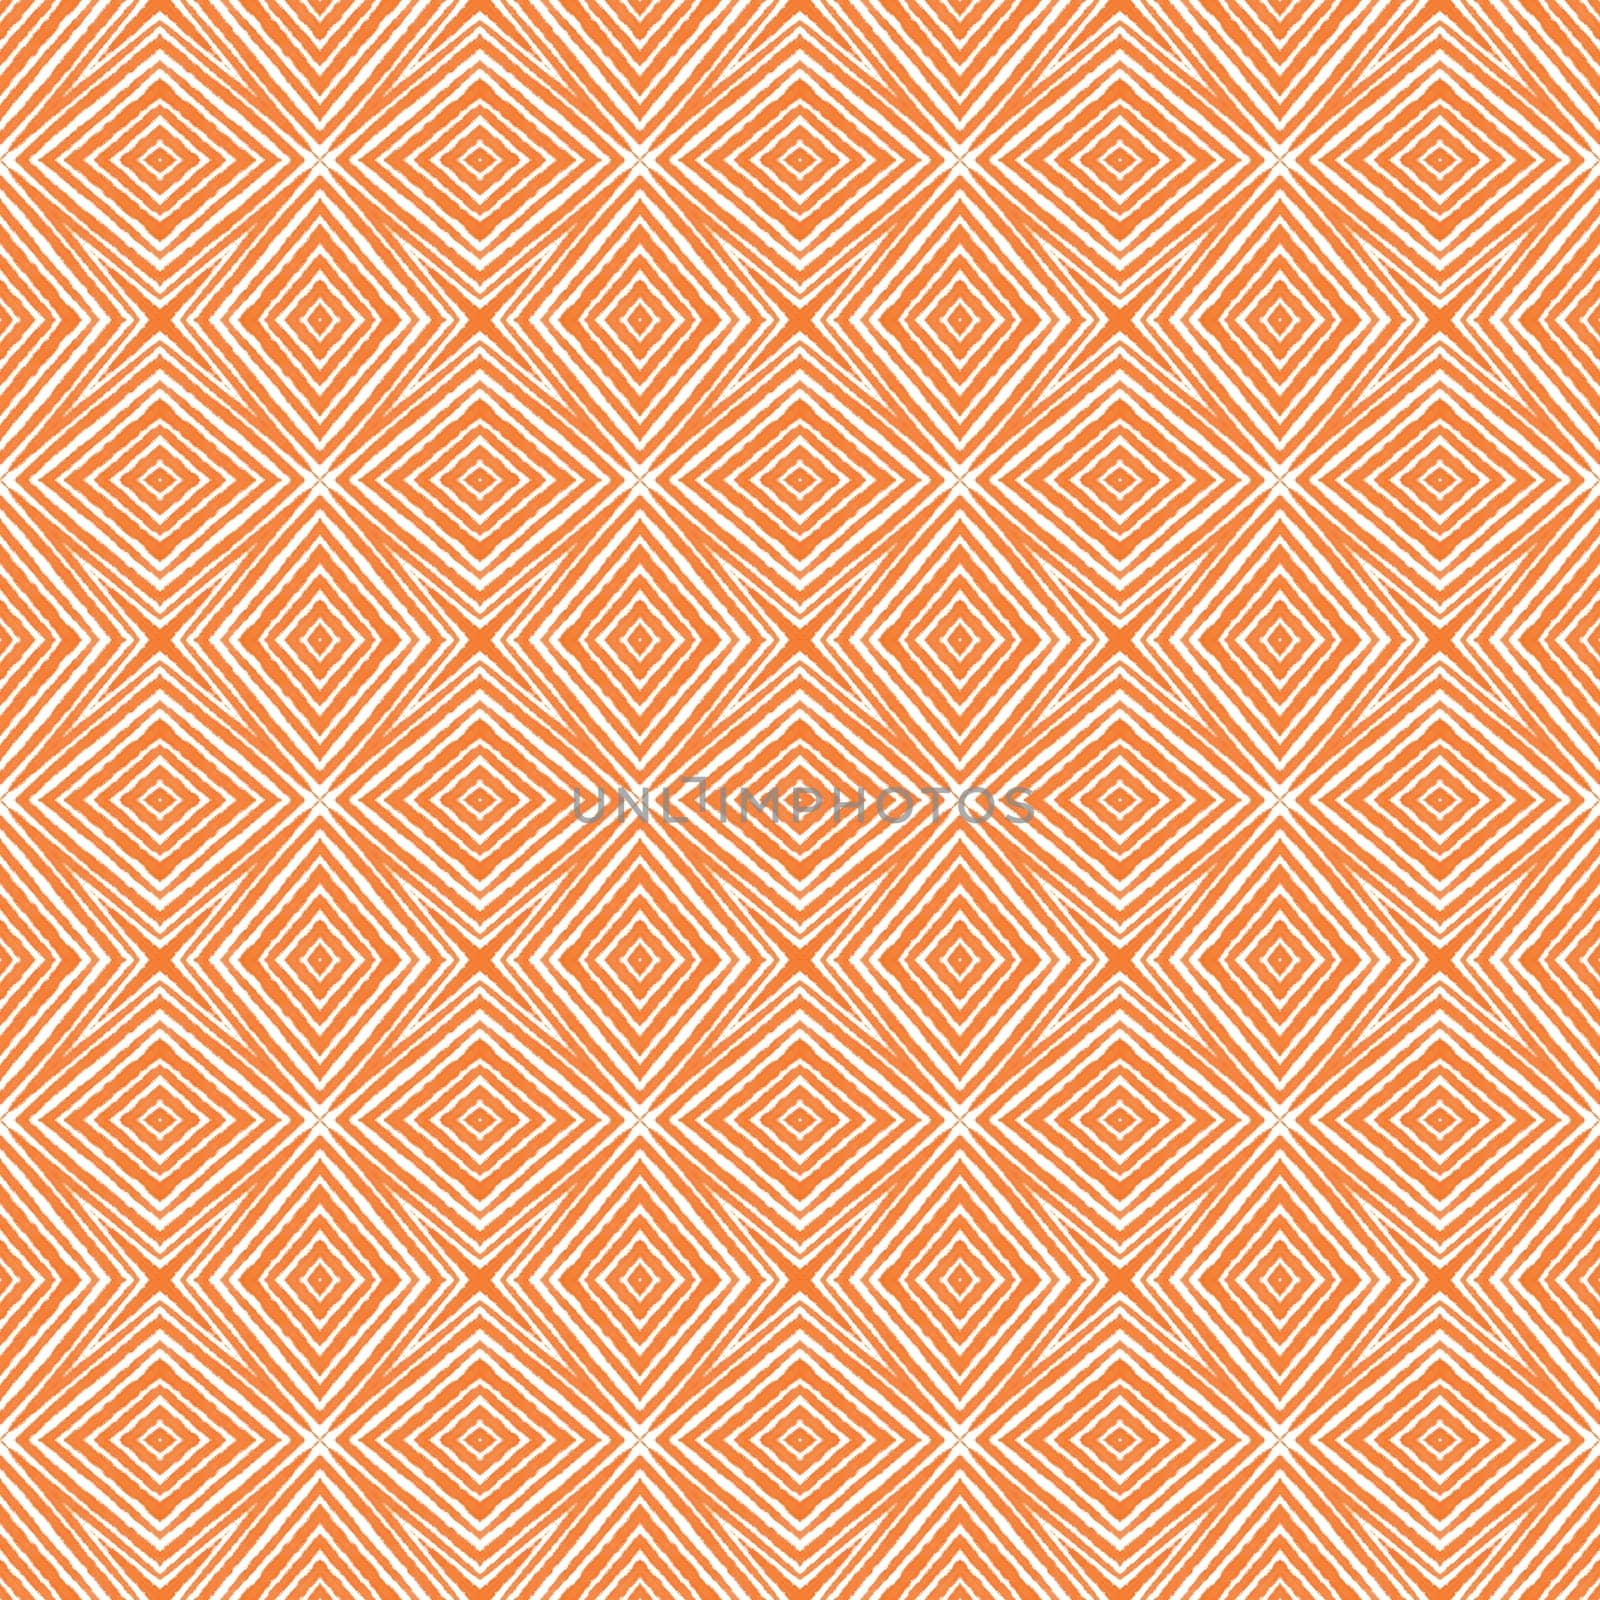 Textured stripes pattern. Orange symmetrical by beginagain